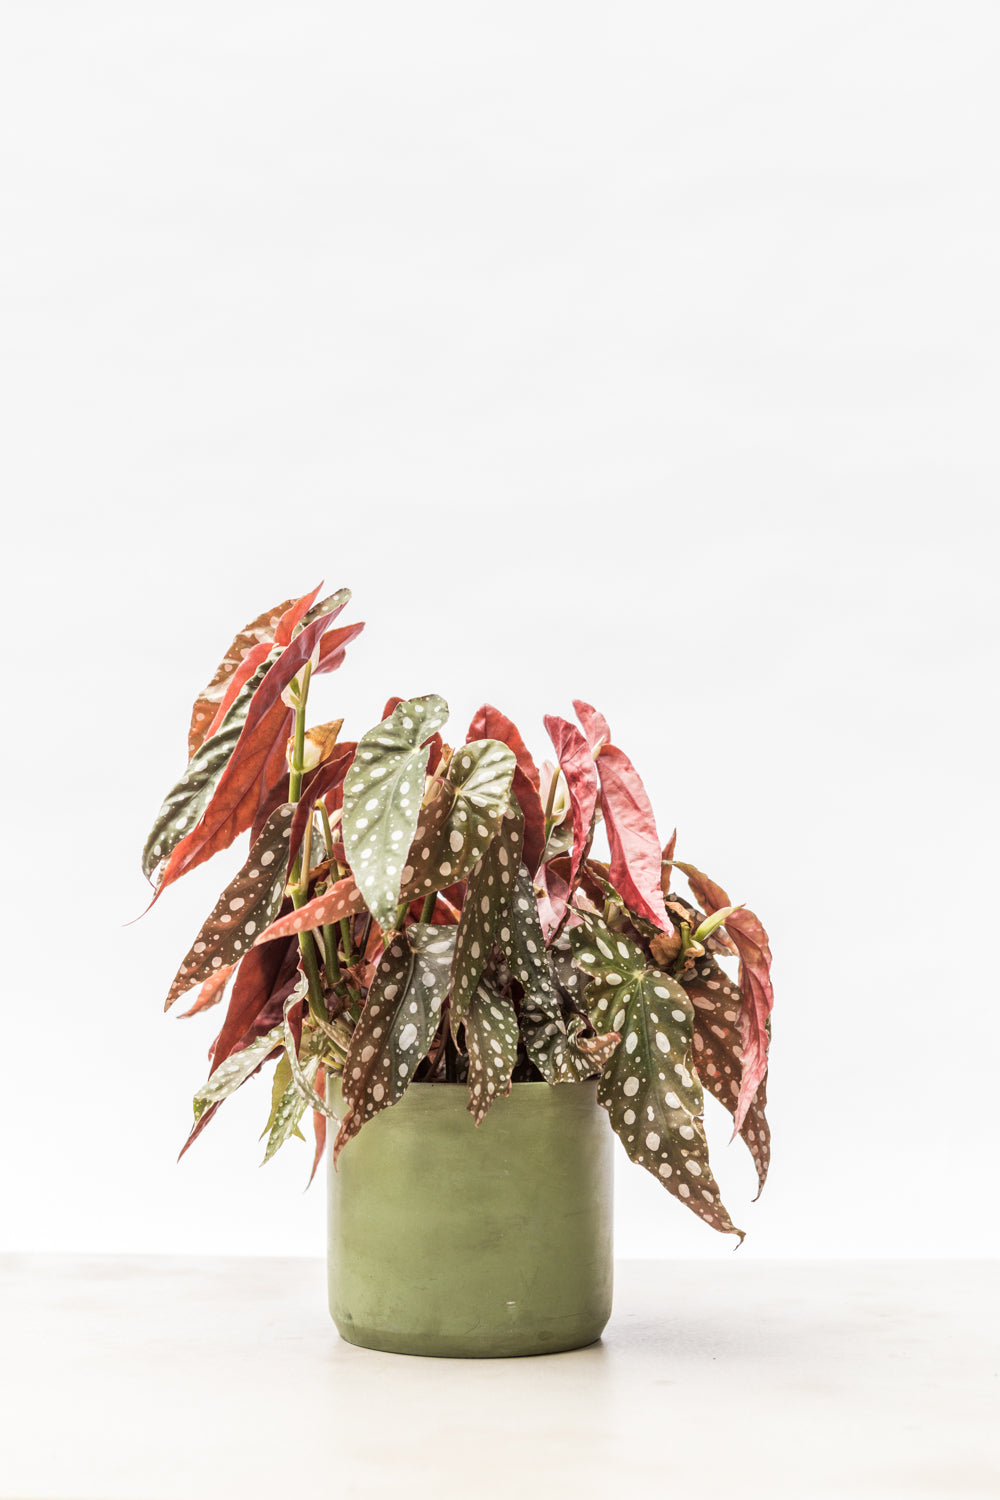 Polkadot Begonia or 'Angel Wing Plant'